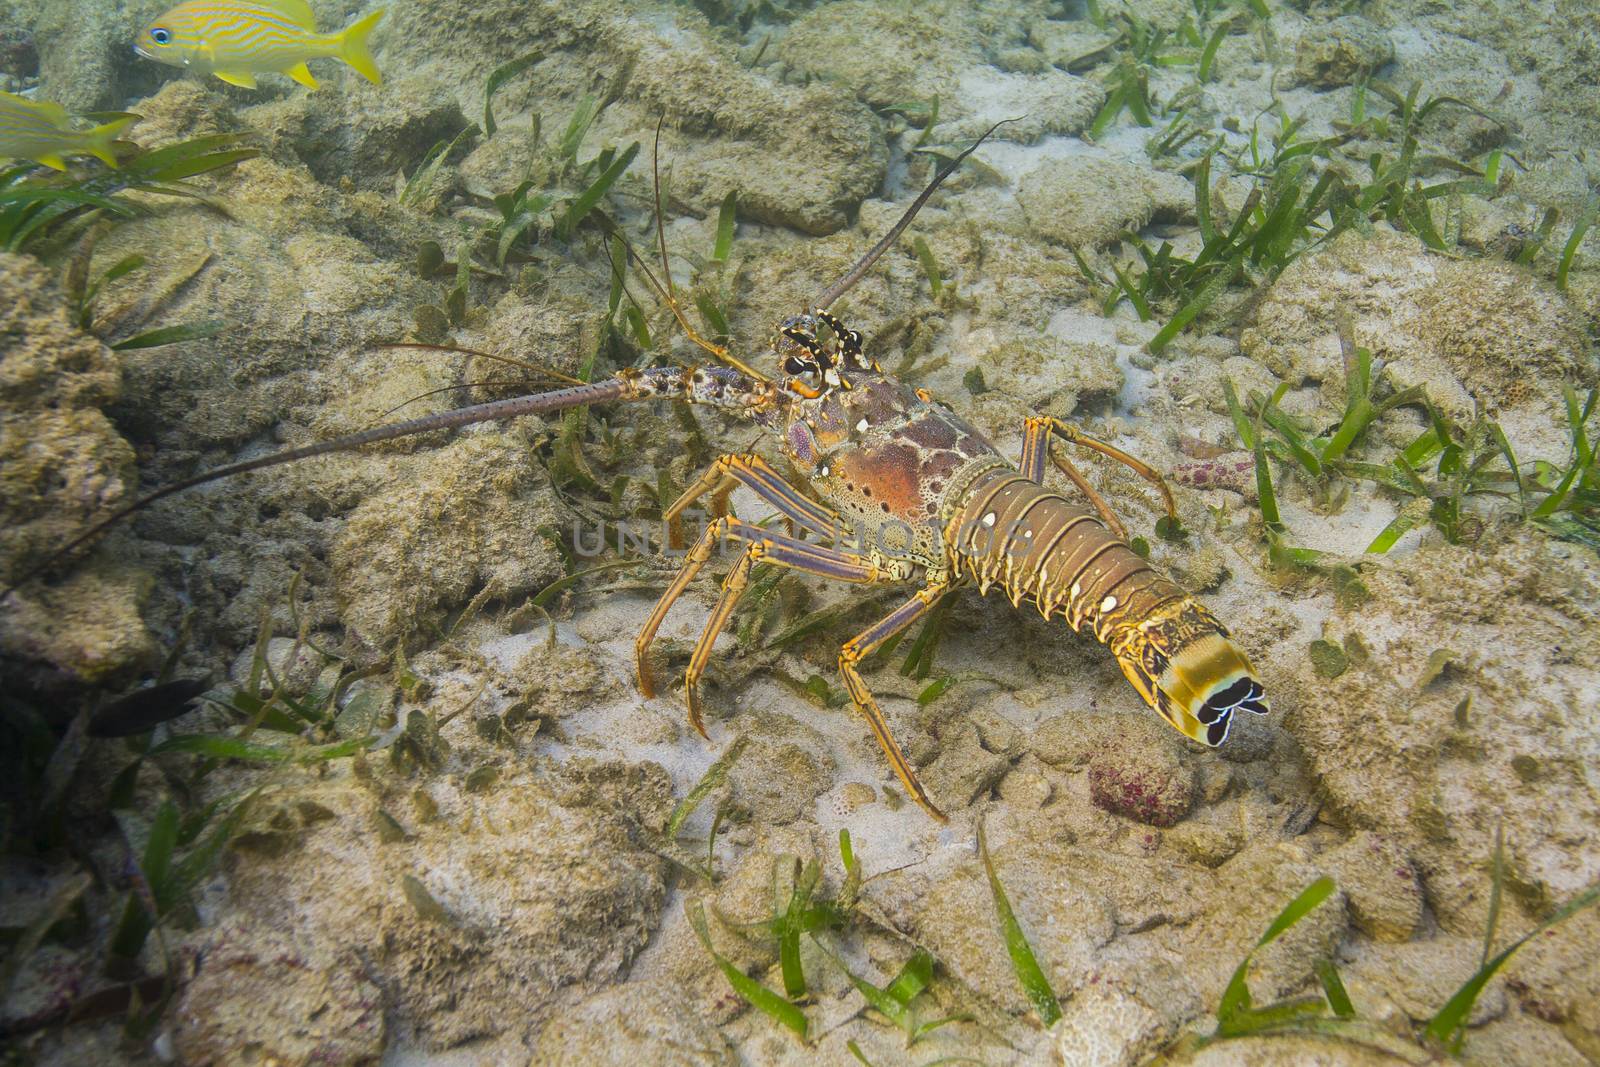 Panulirus argus lobster walking across rocks and algea